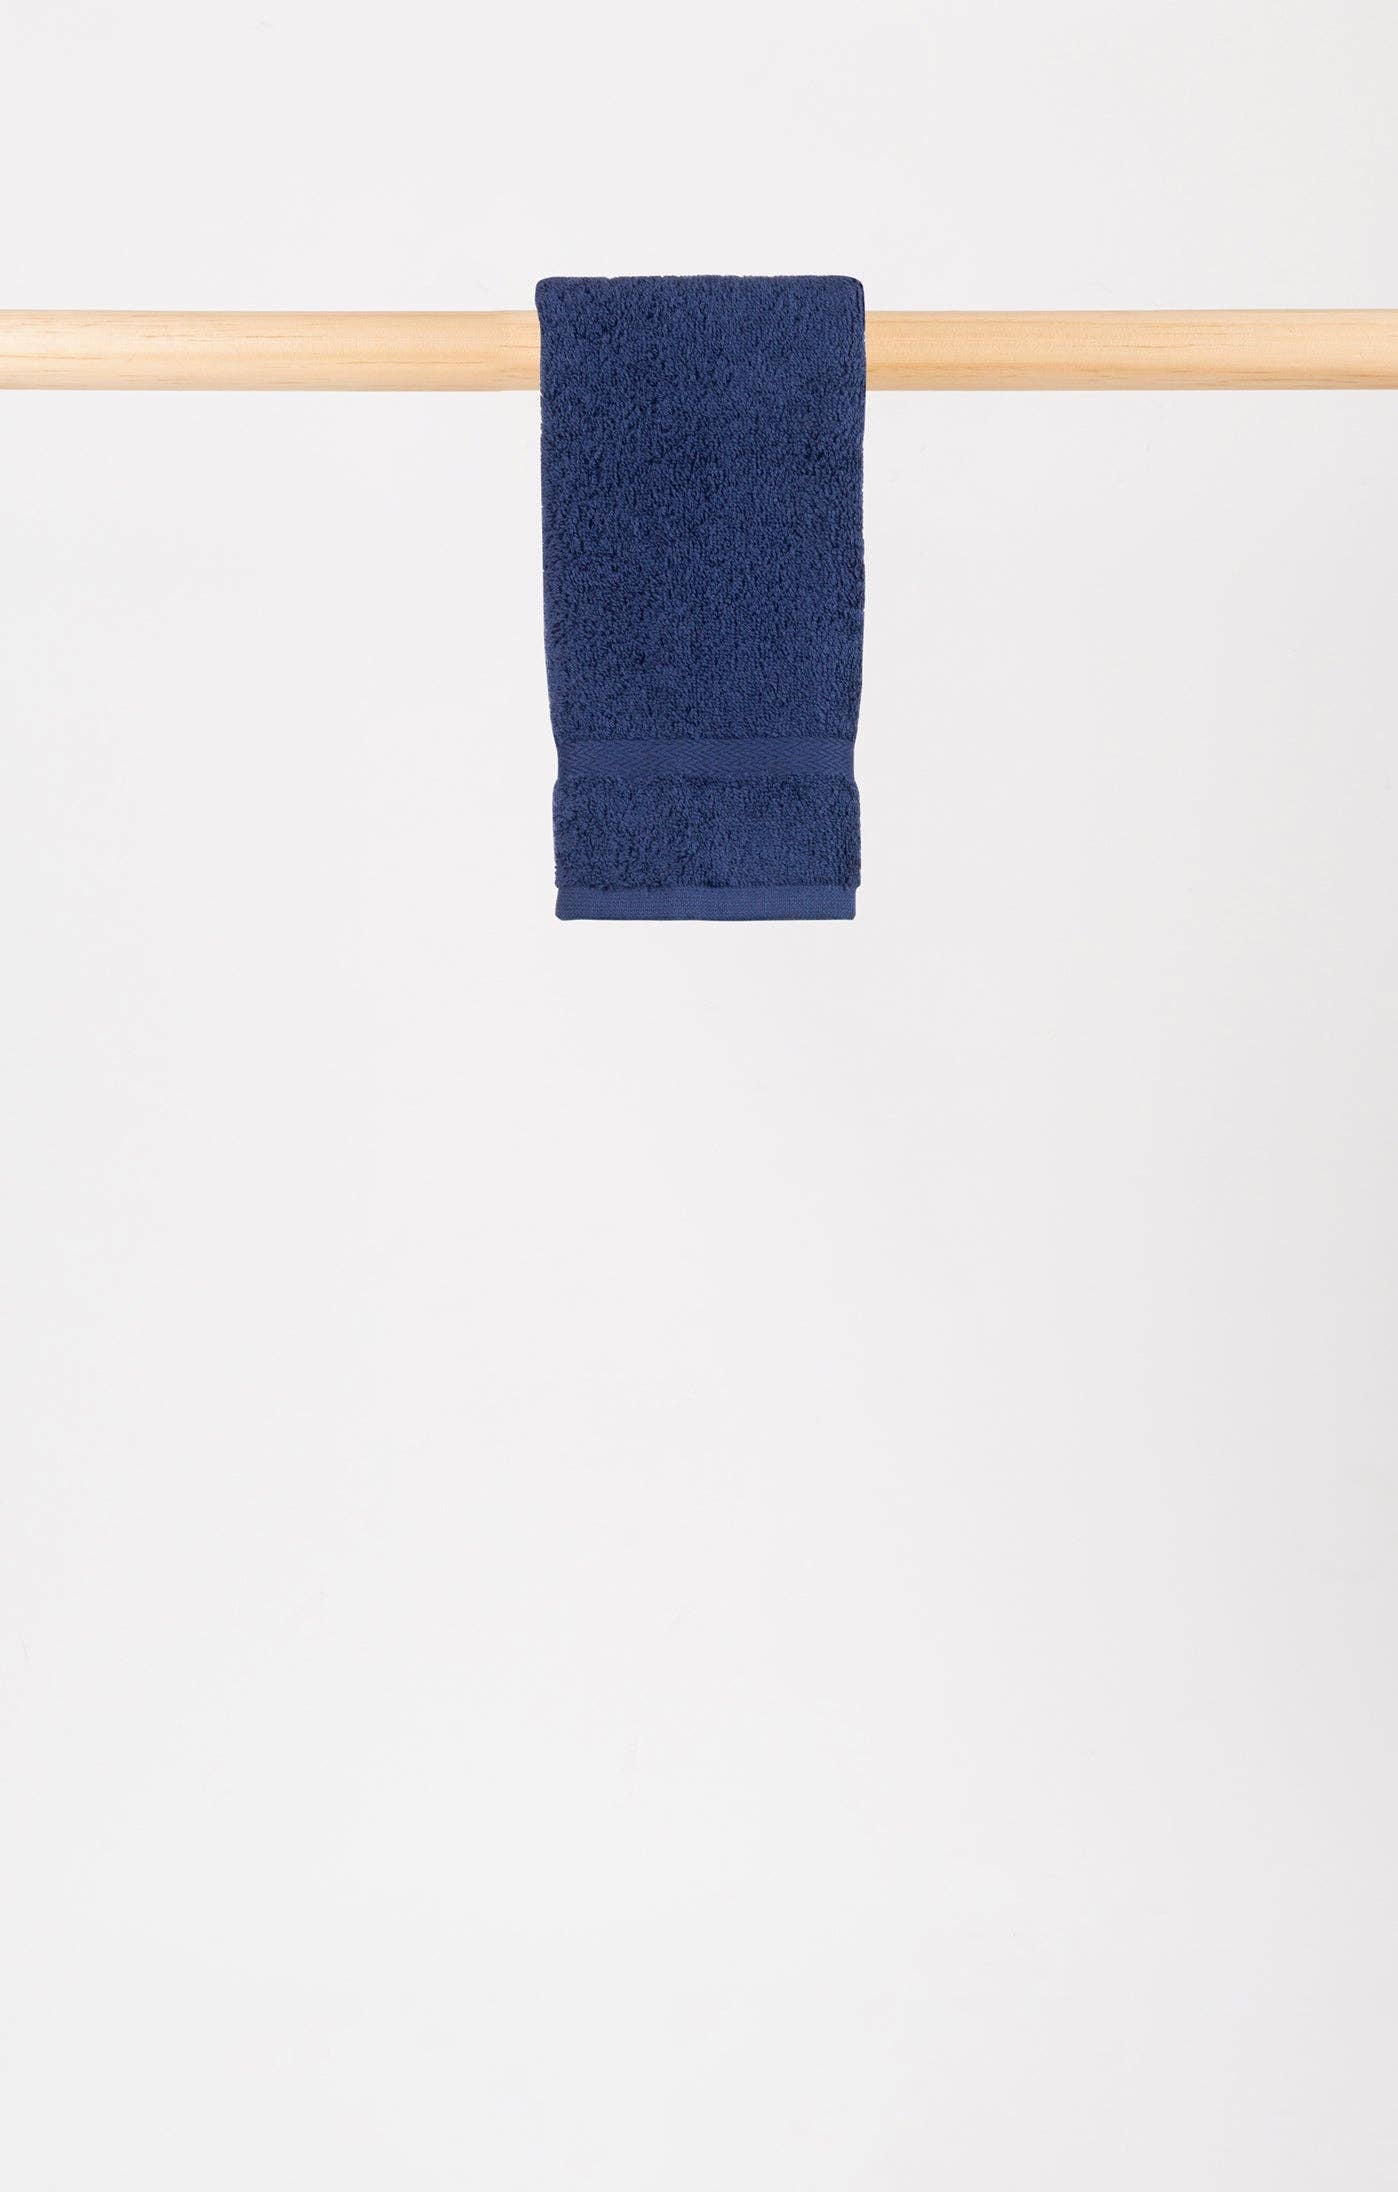 cobalt blue almonda hand towel hanging on a wooden rail